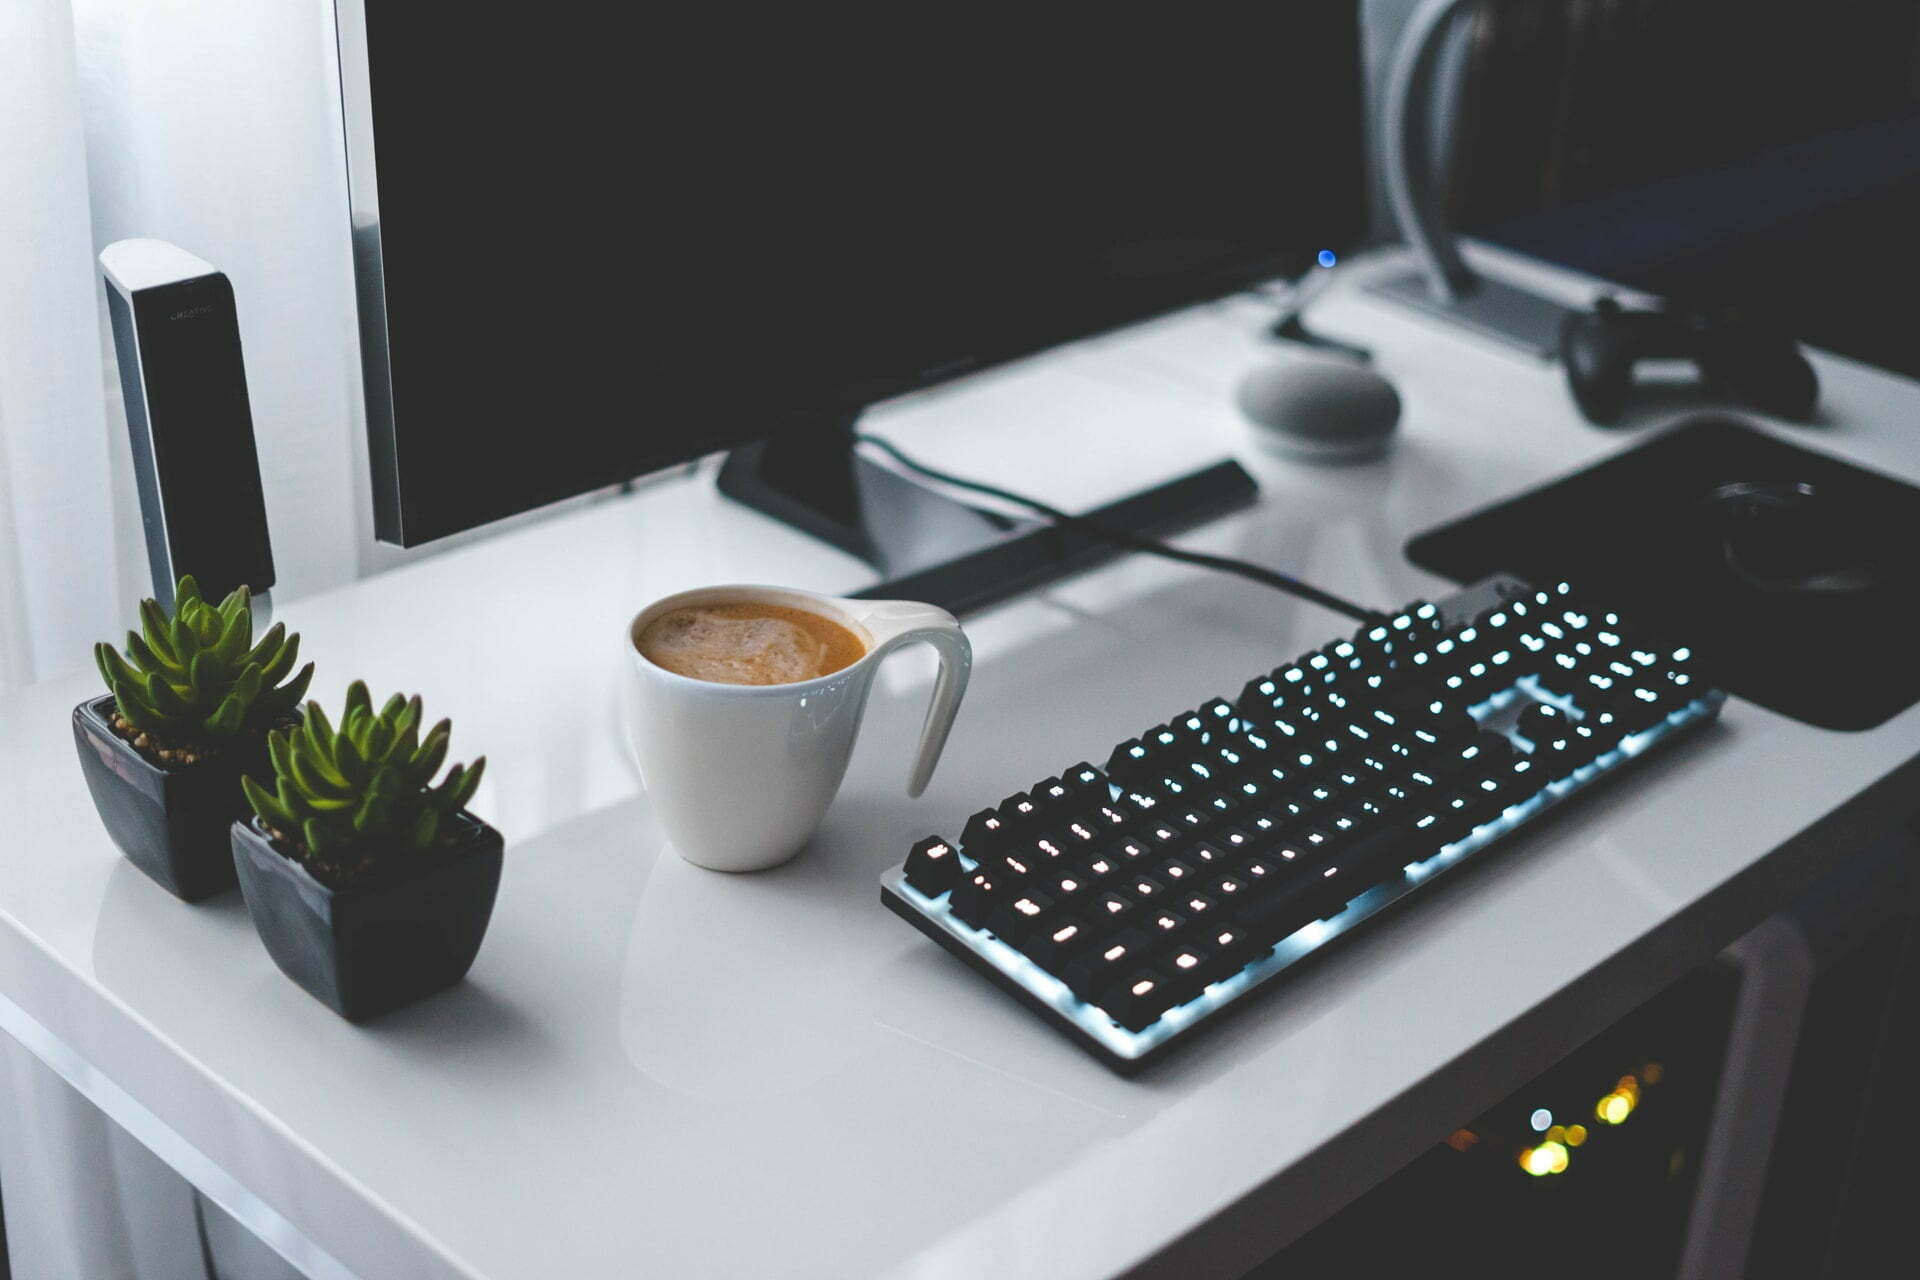 a keyboard and coffee mug on a desk